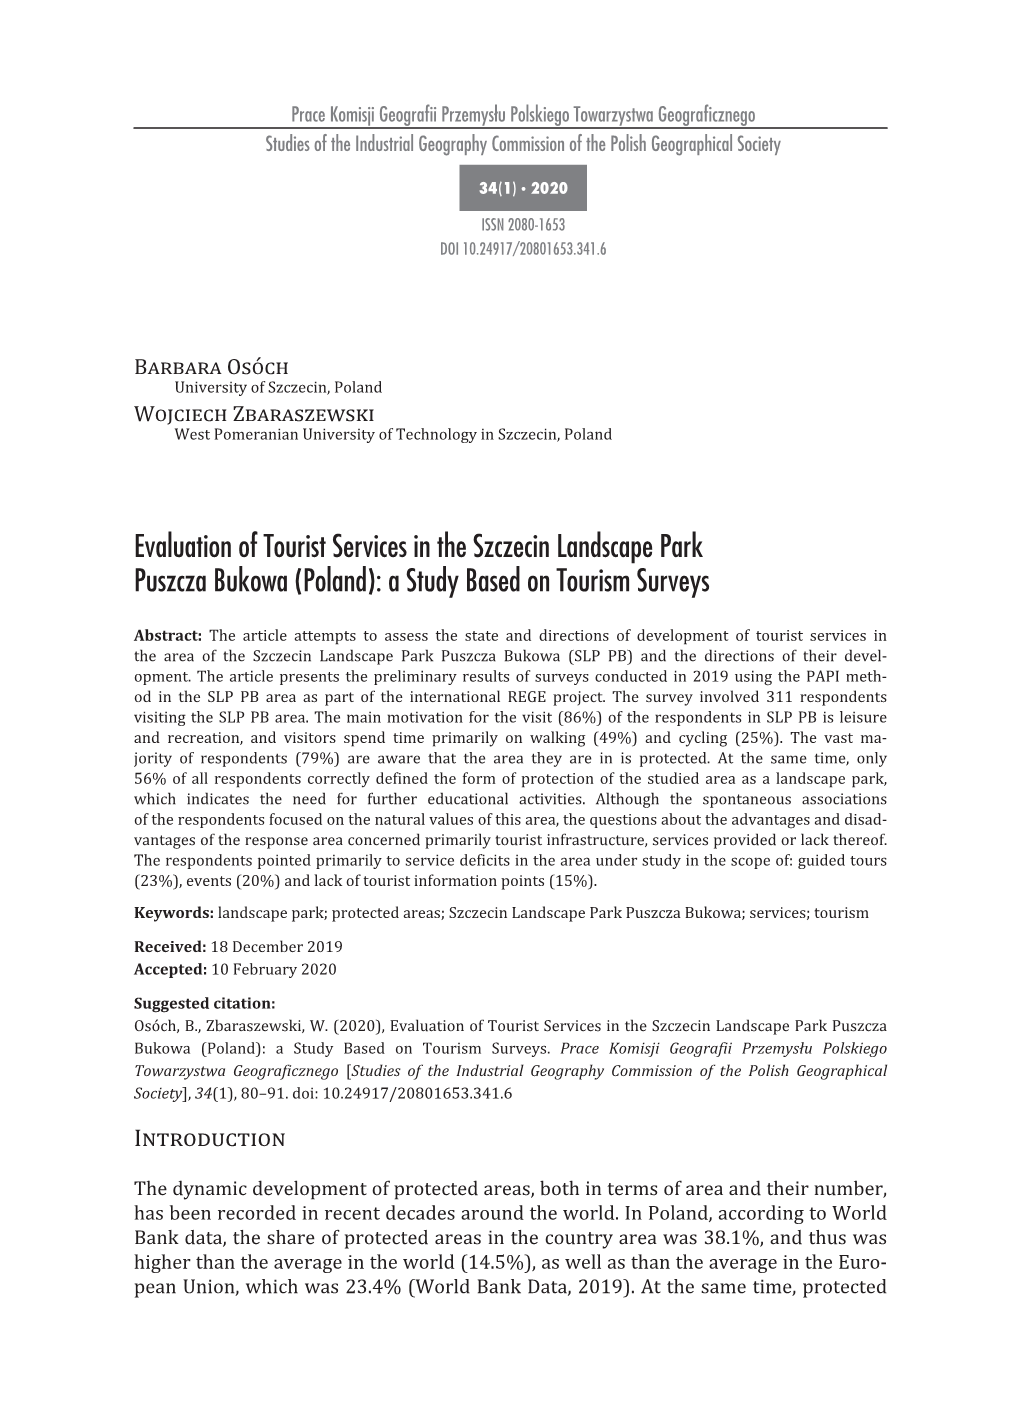 Evaluation of Tourist Services in the Szczecin Landscape Park Puszcza Bukowa (Poland): a Study Based on Tourism Surveys